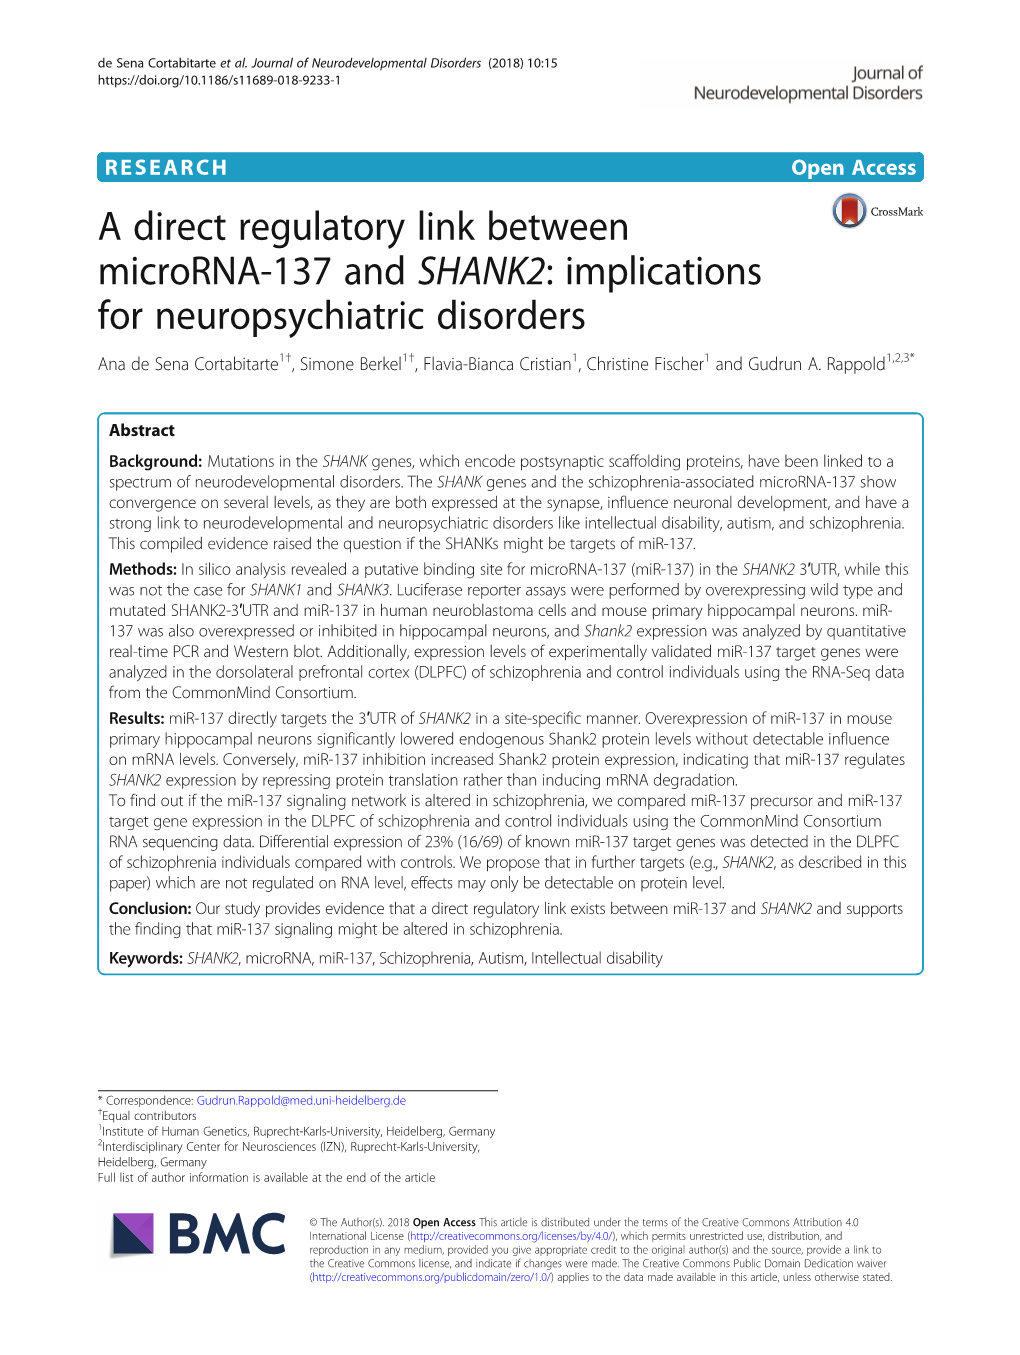 A Direct Regulatory Link Between Microrna-137 and SHANK2